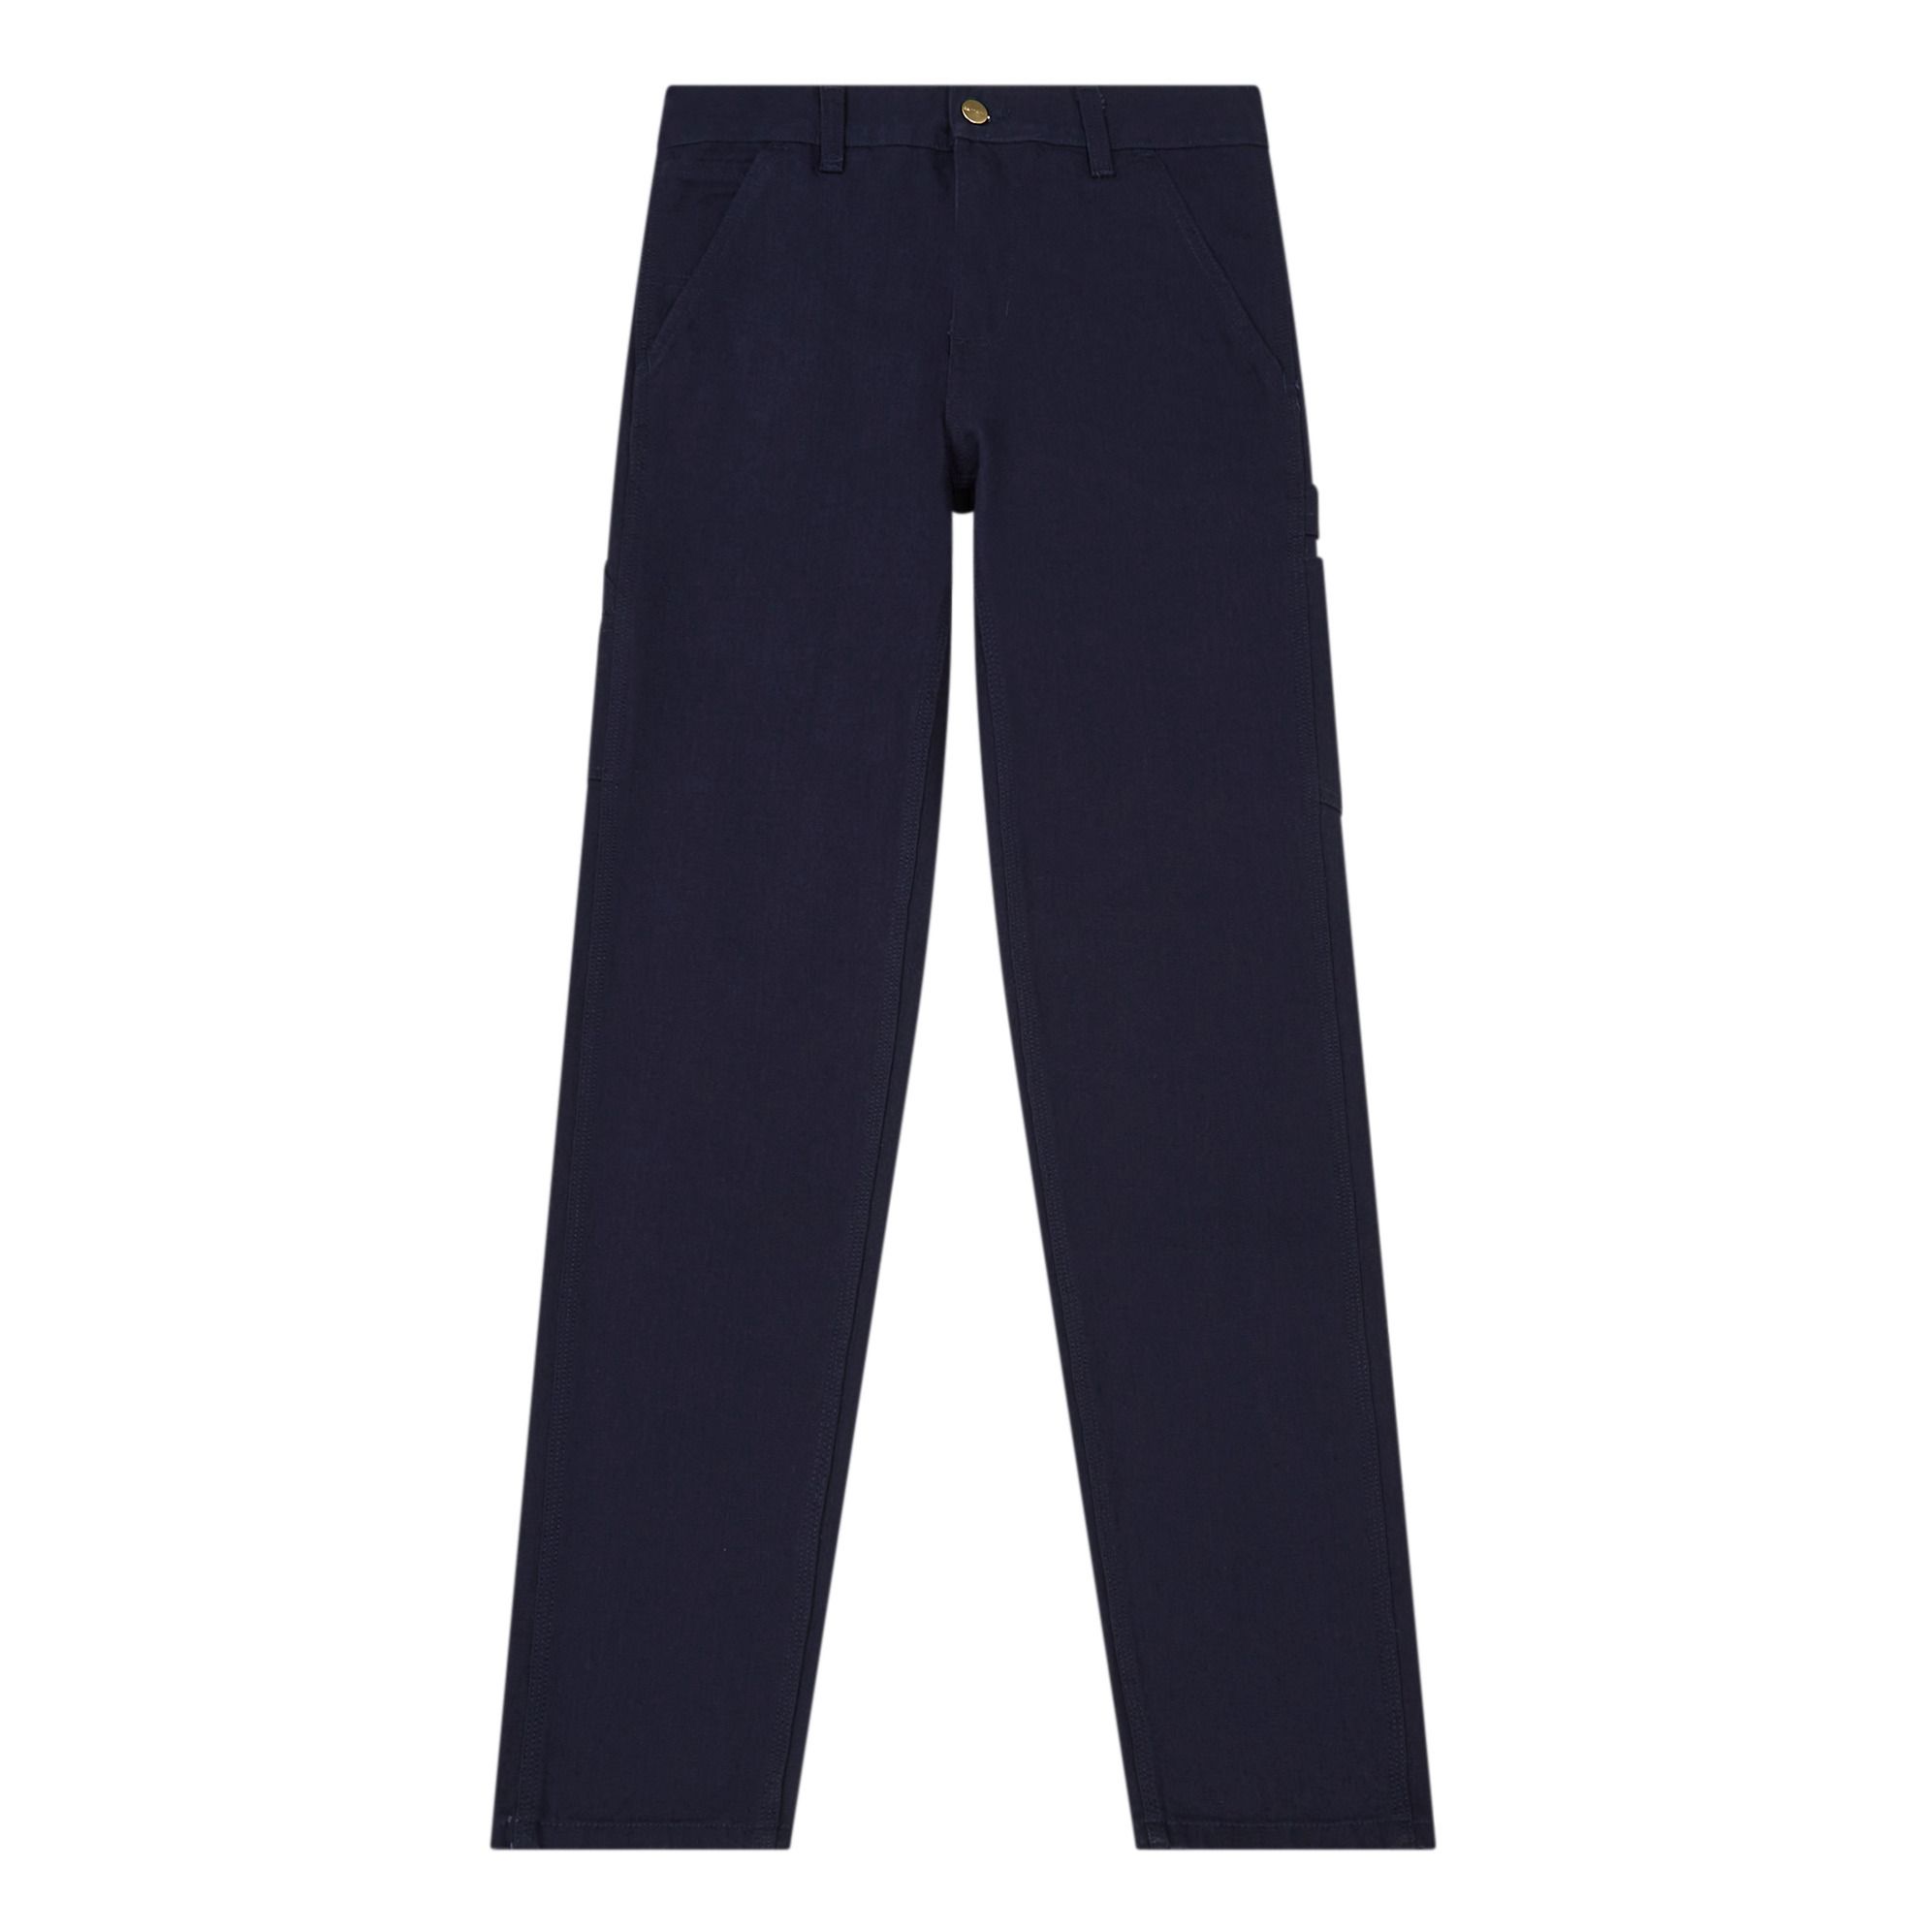 Carhartt WIP - Pantalon Ruck Tapered Coton Bio - Homme - Bleu marine